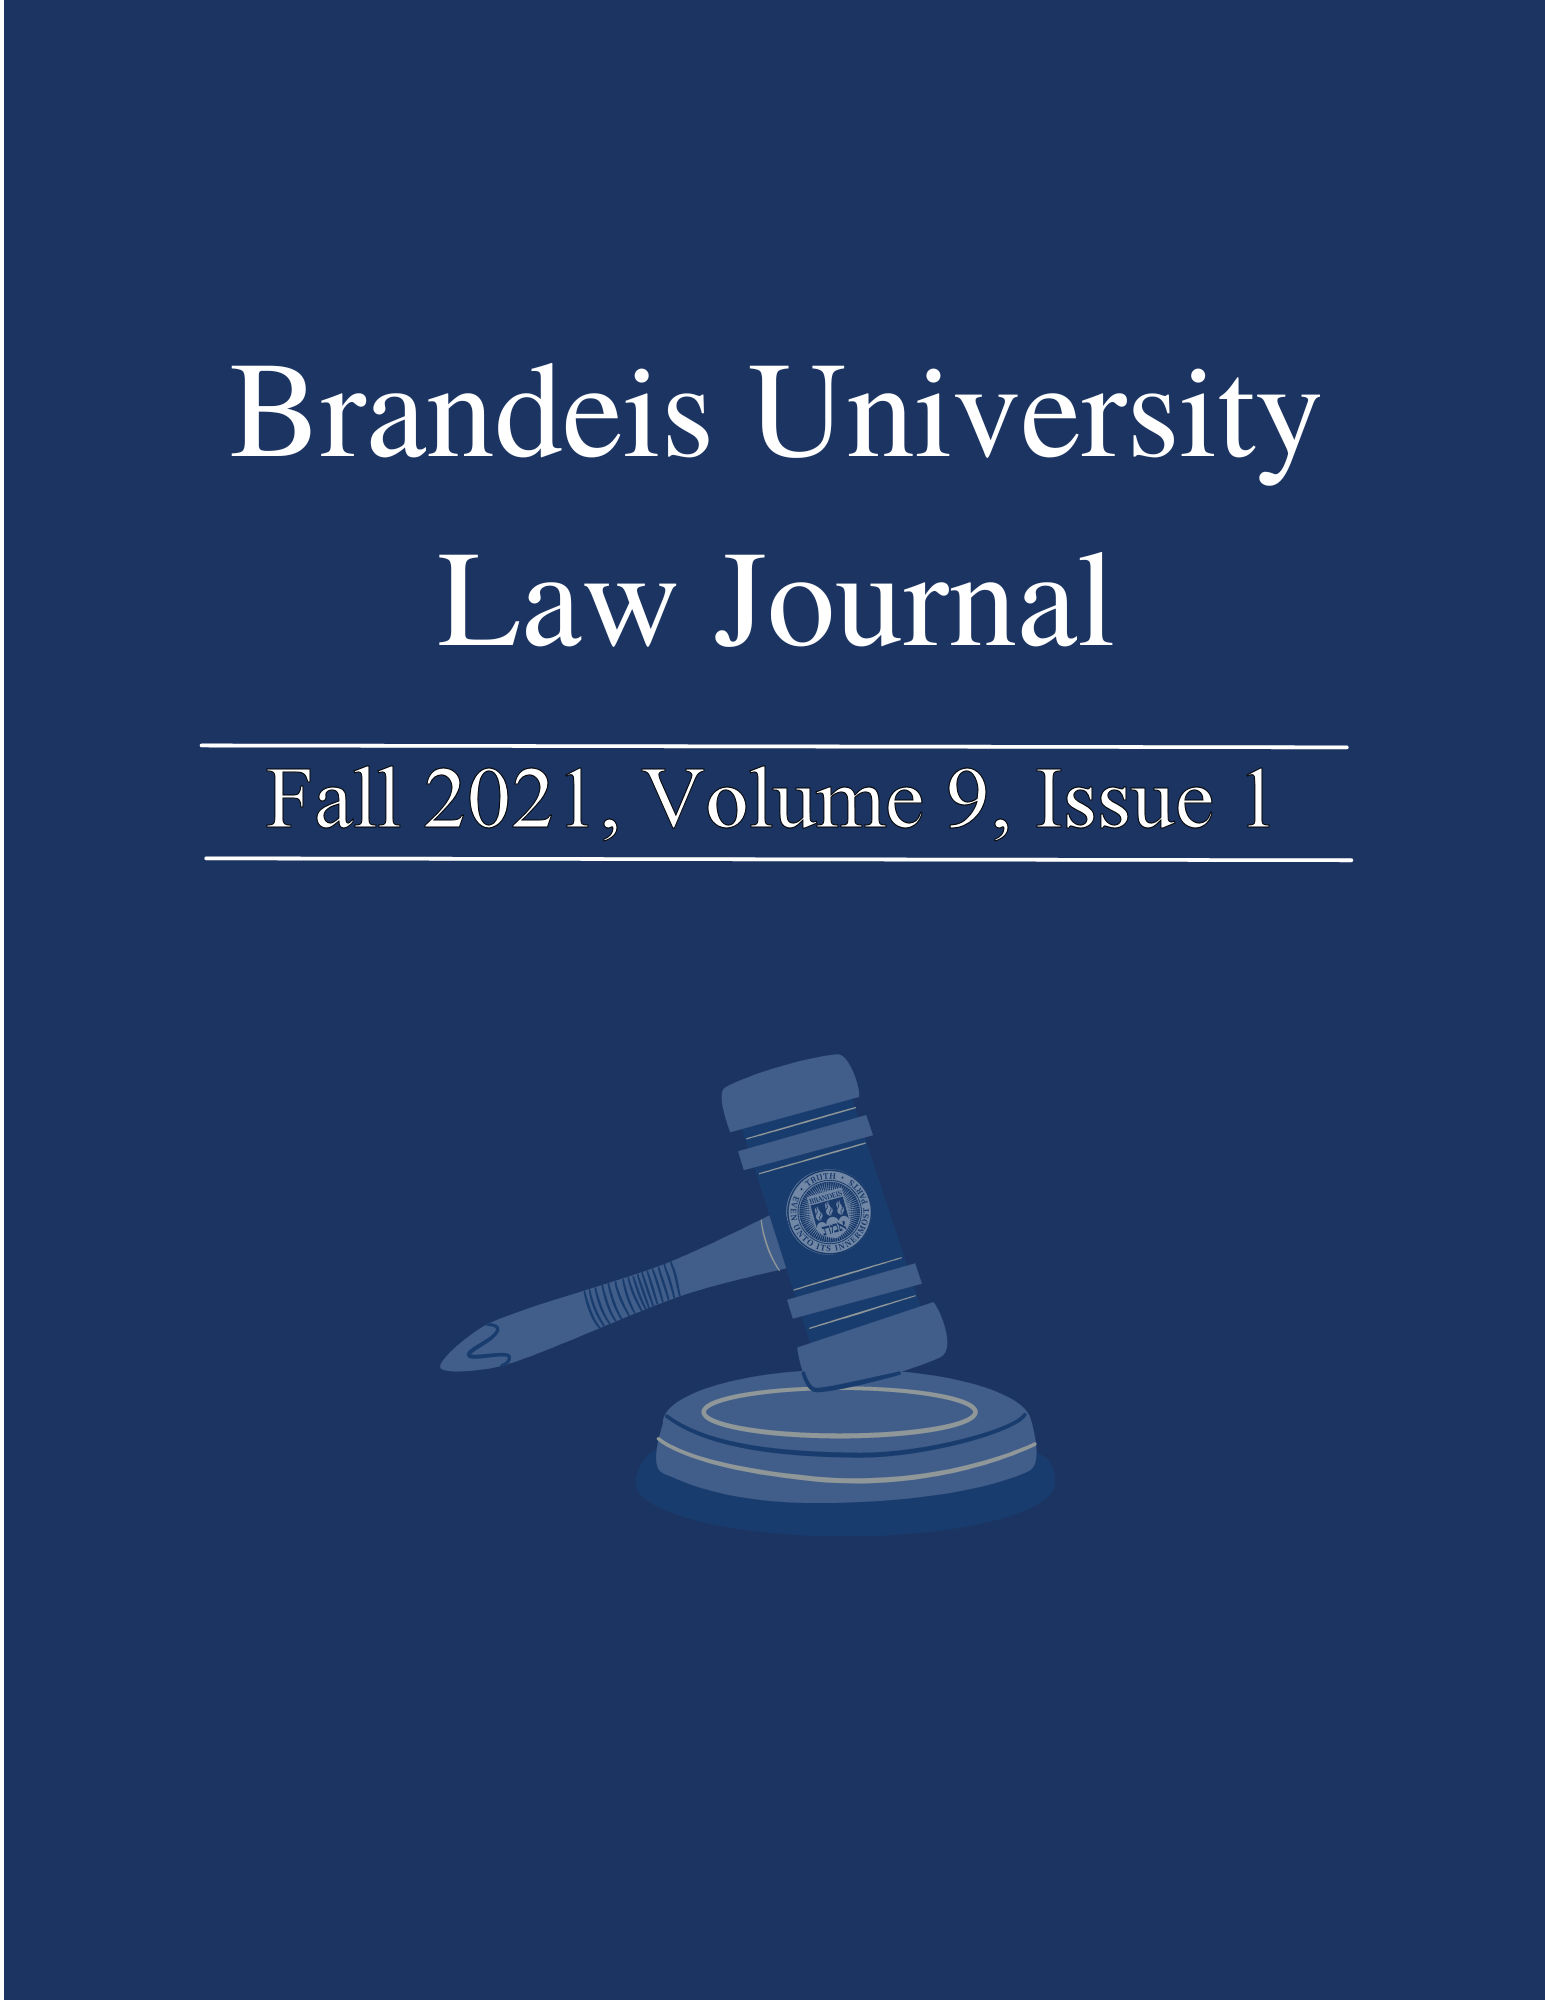 randeis University Law Journal cover art depicting a light blue gavel on a darker blue ground.